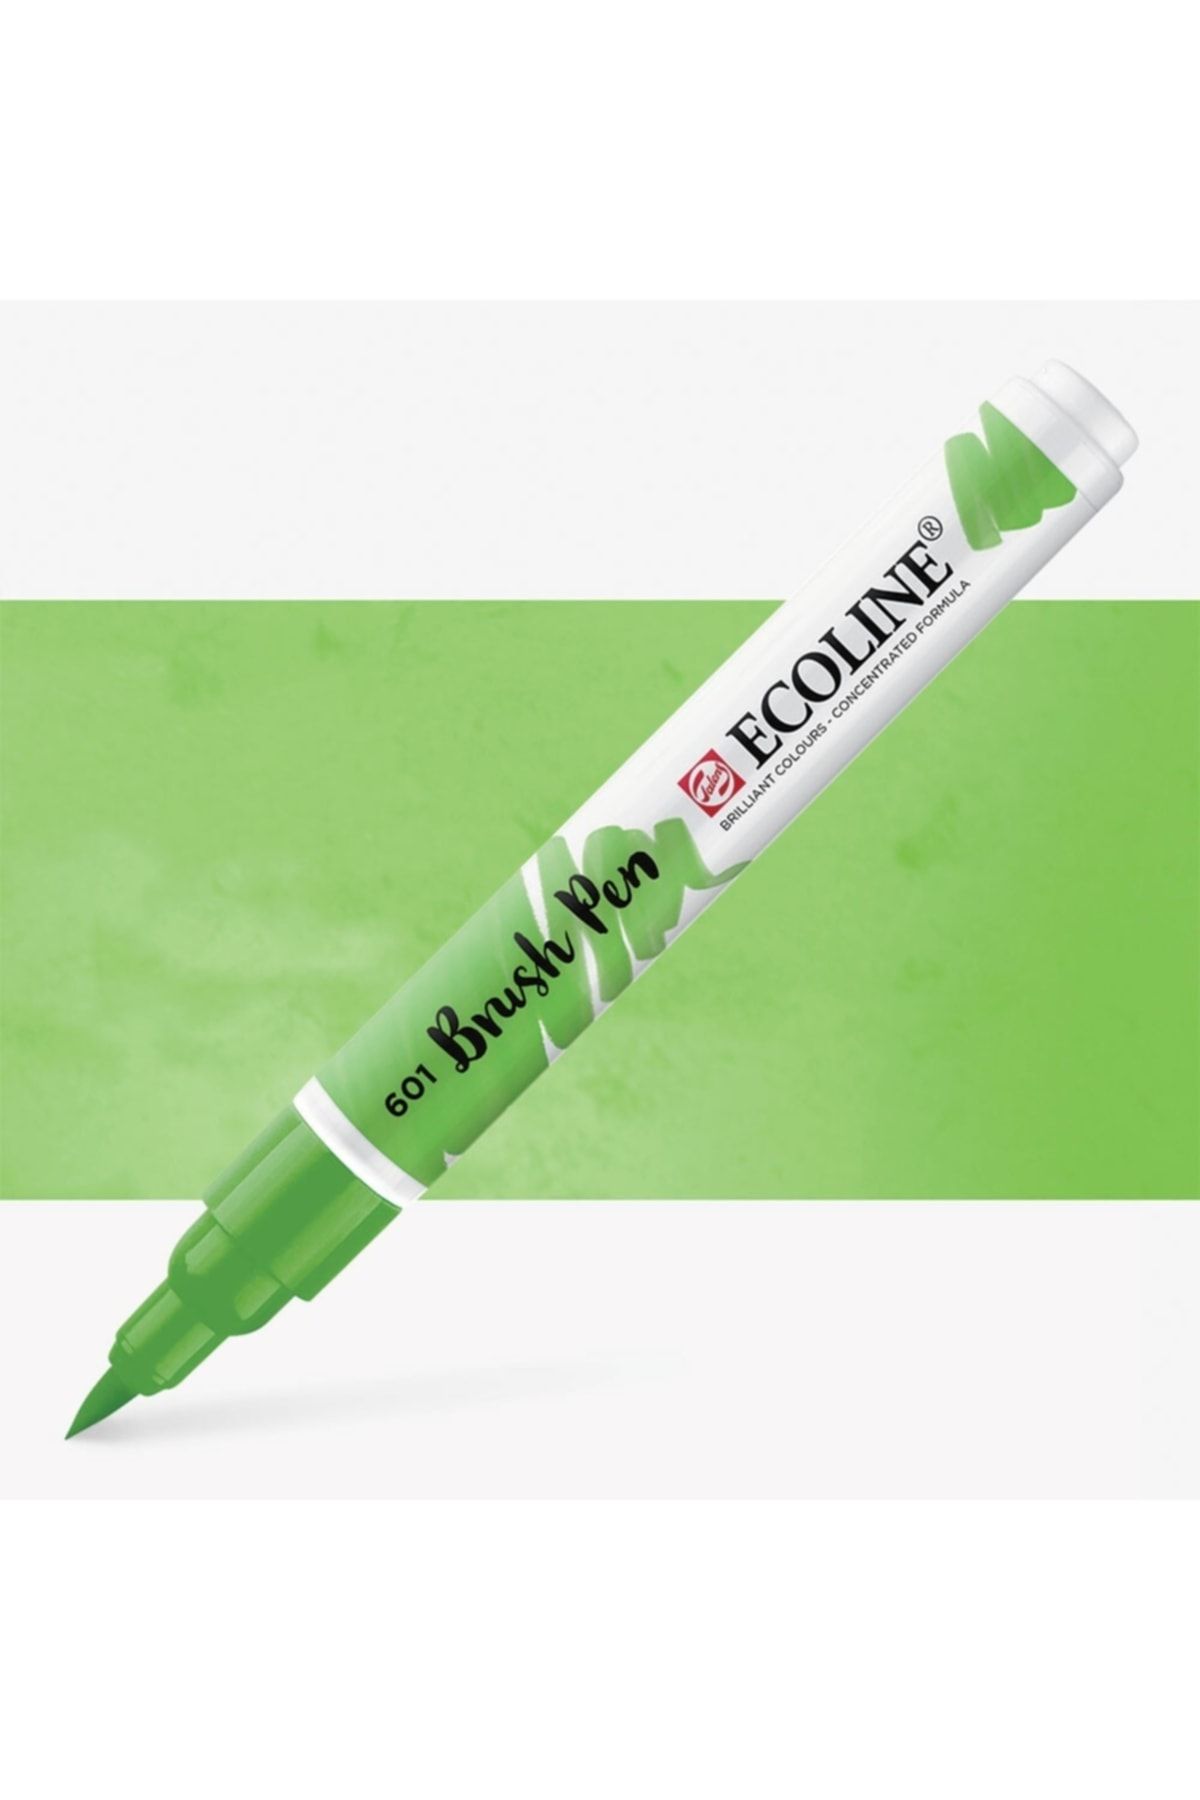 Talens Ecoline Suluboya Brush Pen Light Green 601